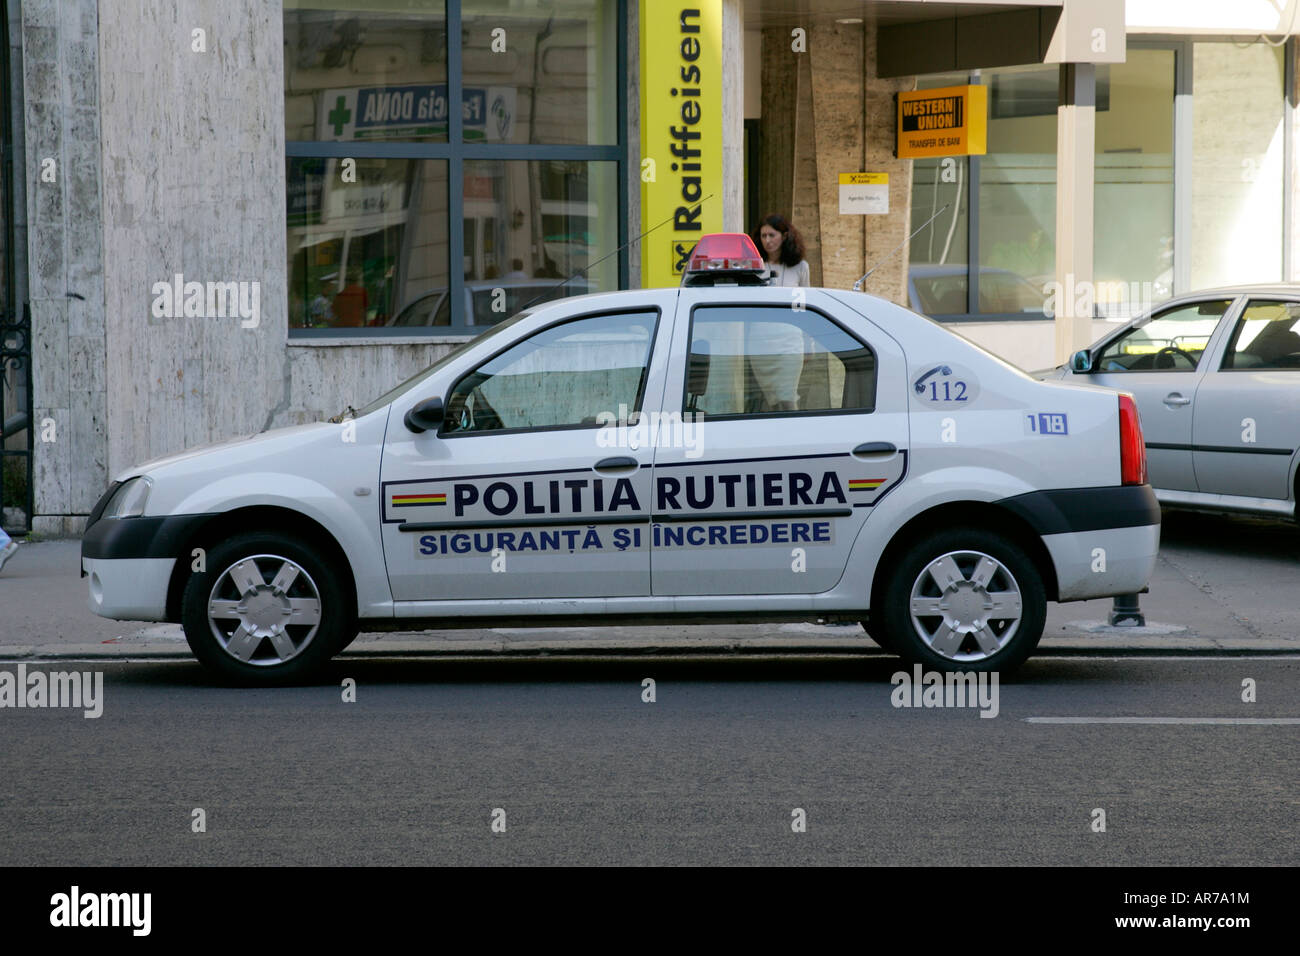 Rumänien Bukarest Stadt Polizei Auto Politia Roman rutiera Stockfoto